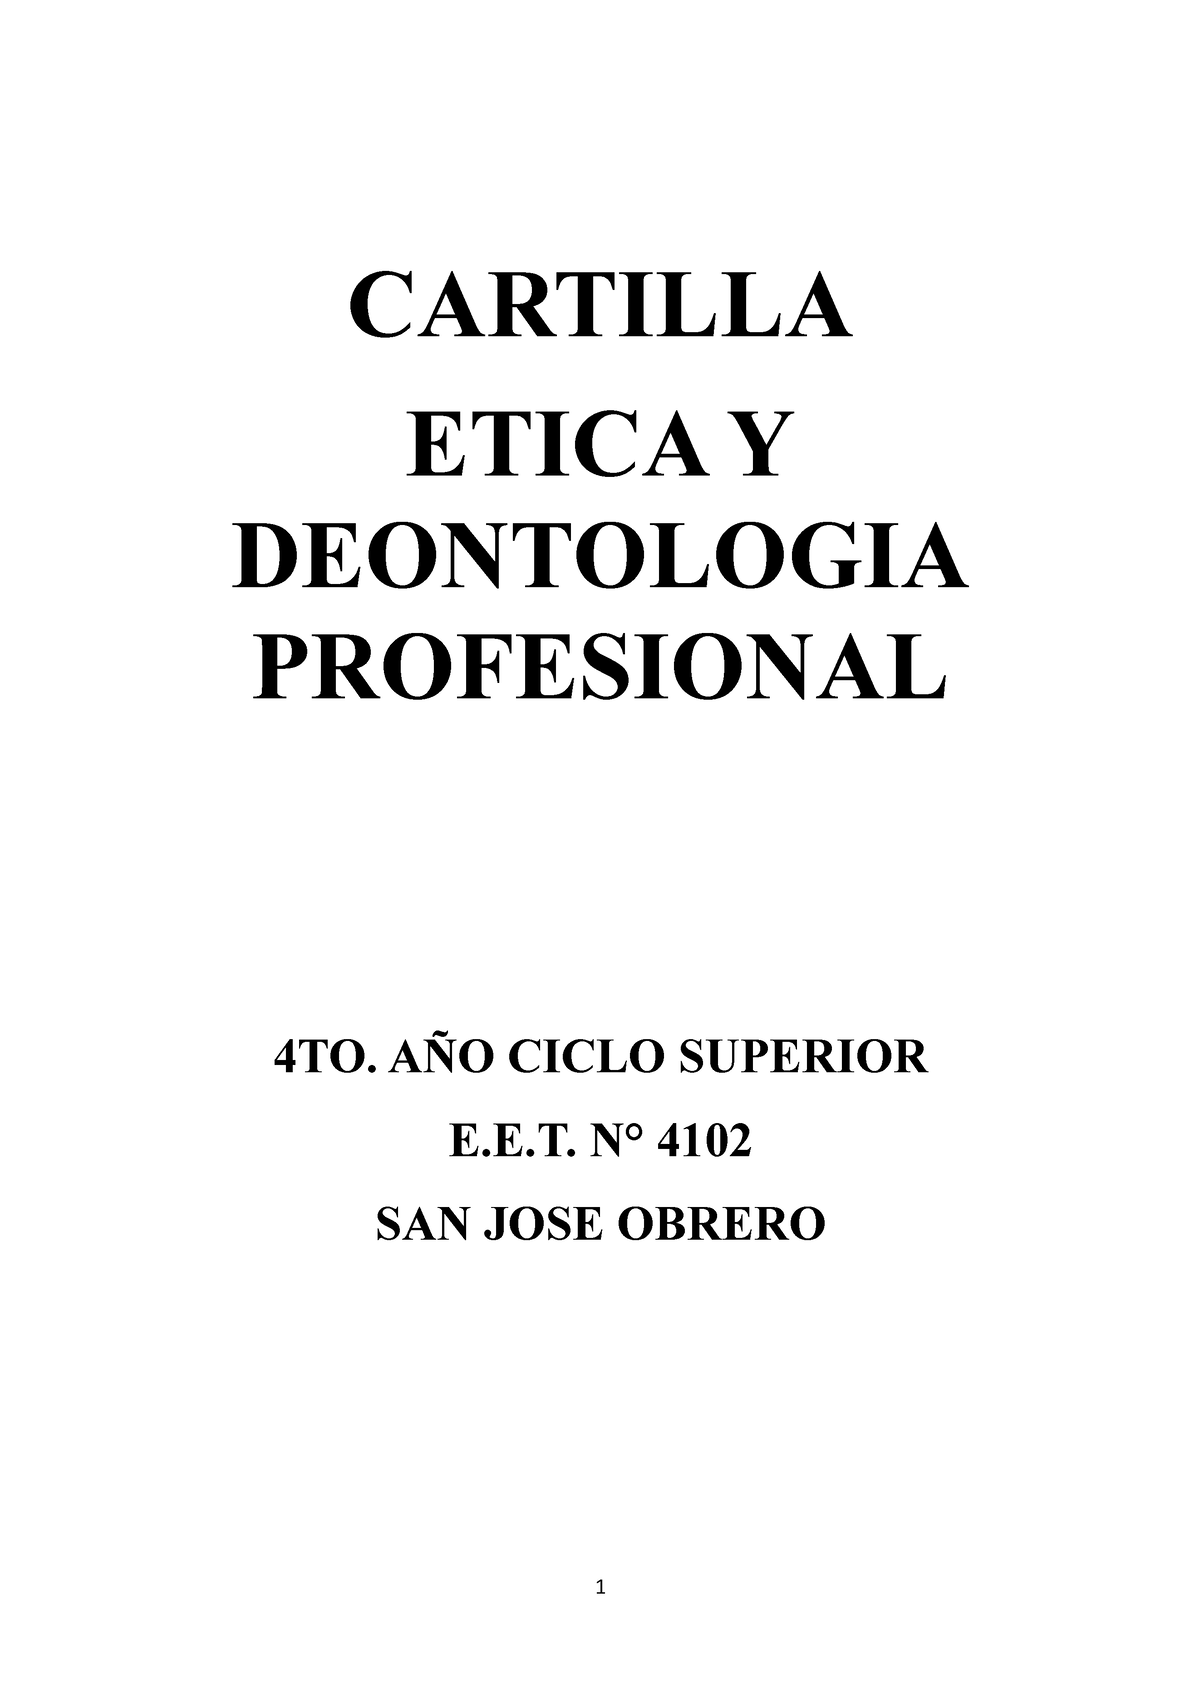 Cartilla Etica Y Deontologia Primer Trimestre Cartilla Etica Y Deontologia Profesional 4to 9070